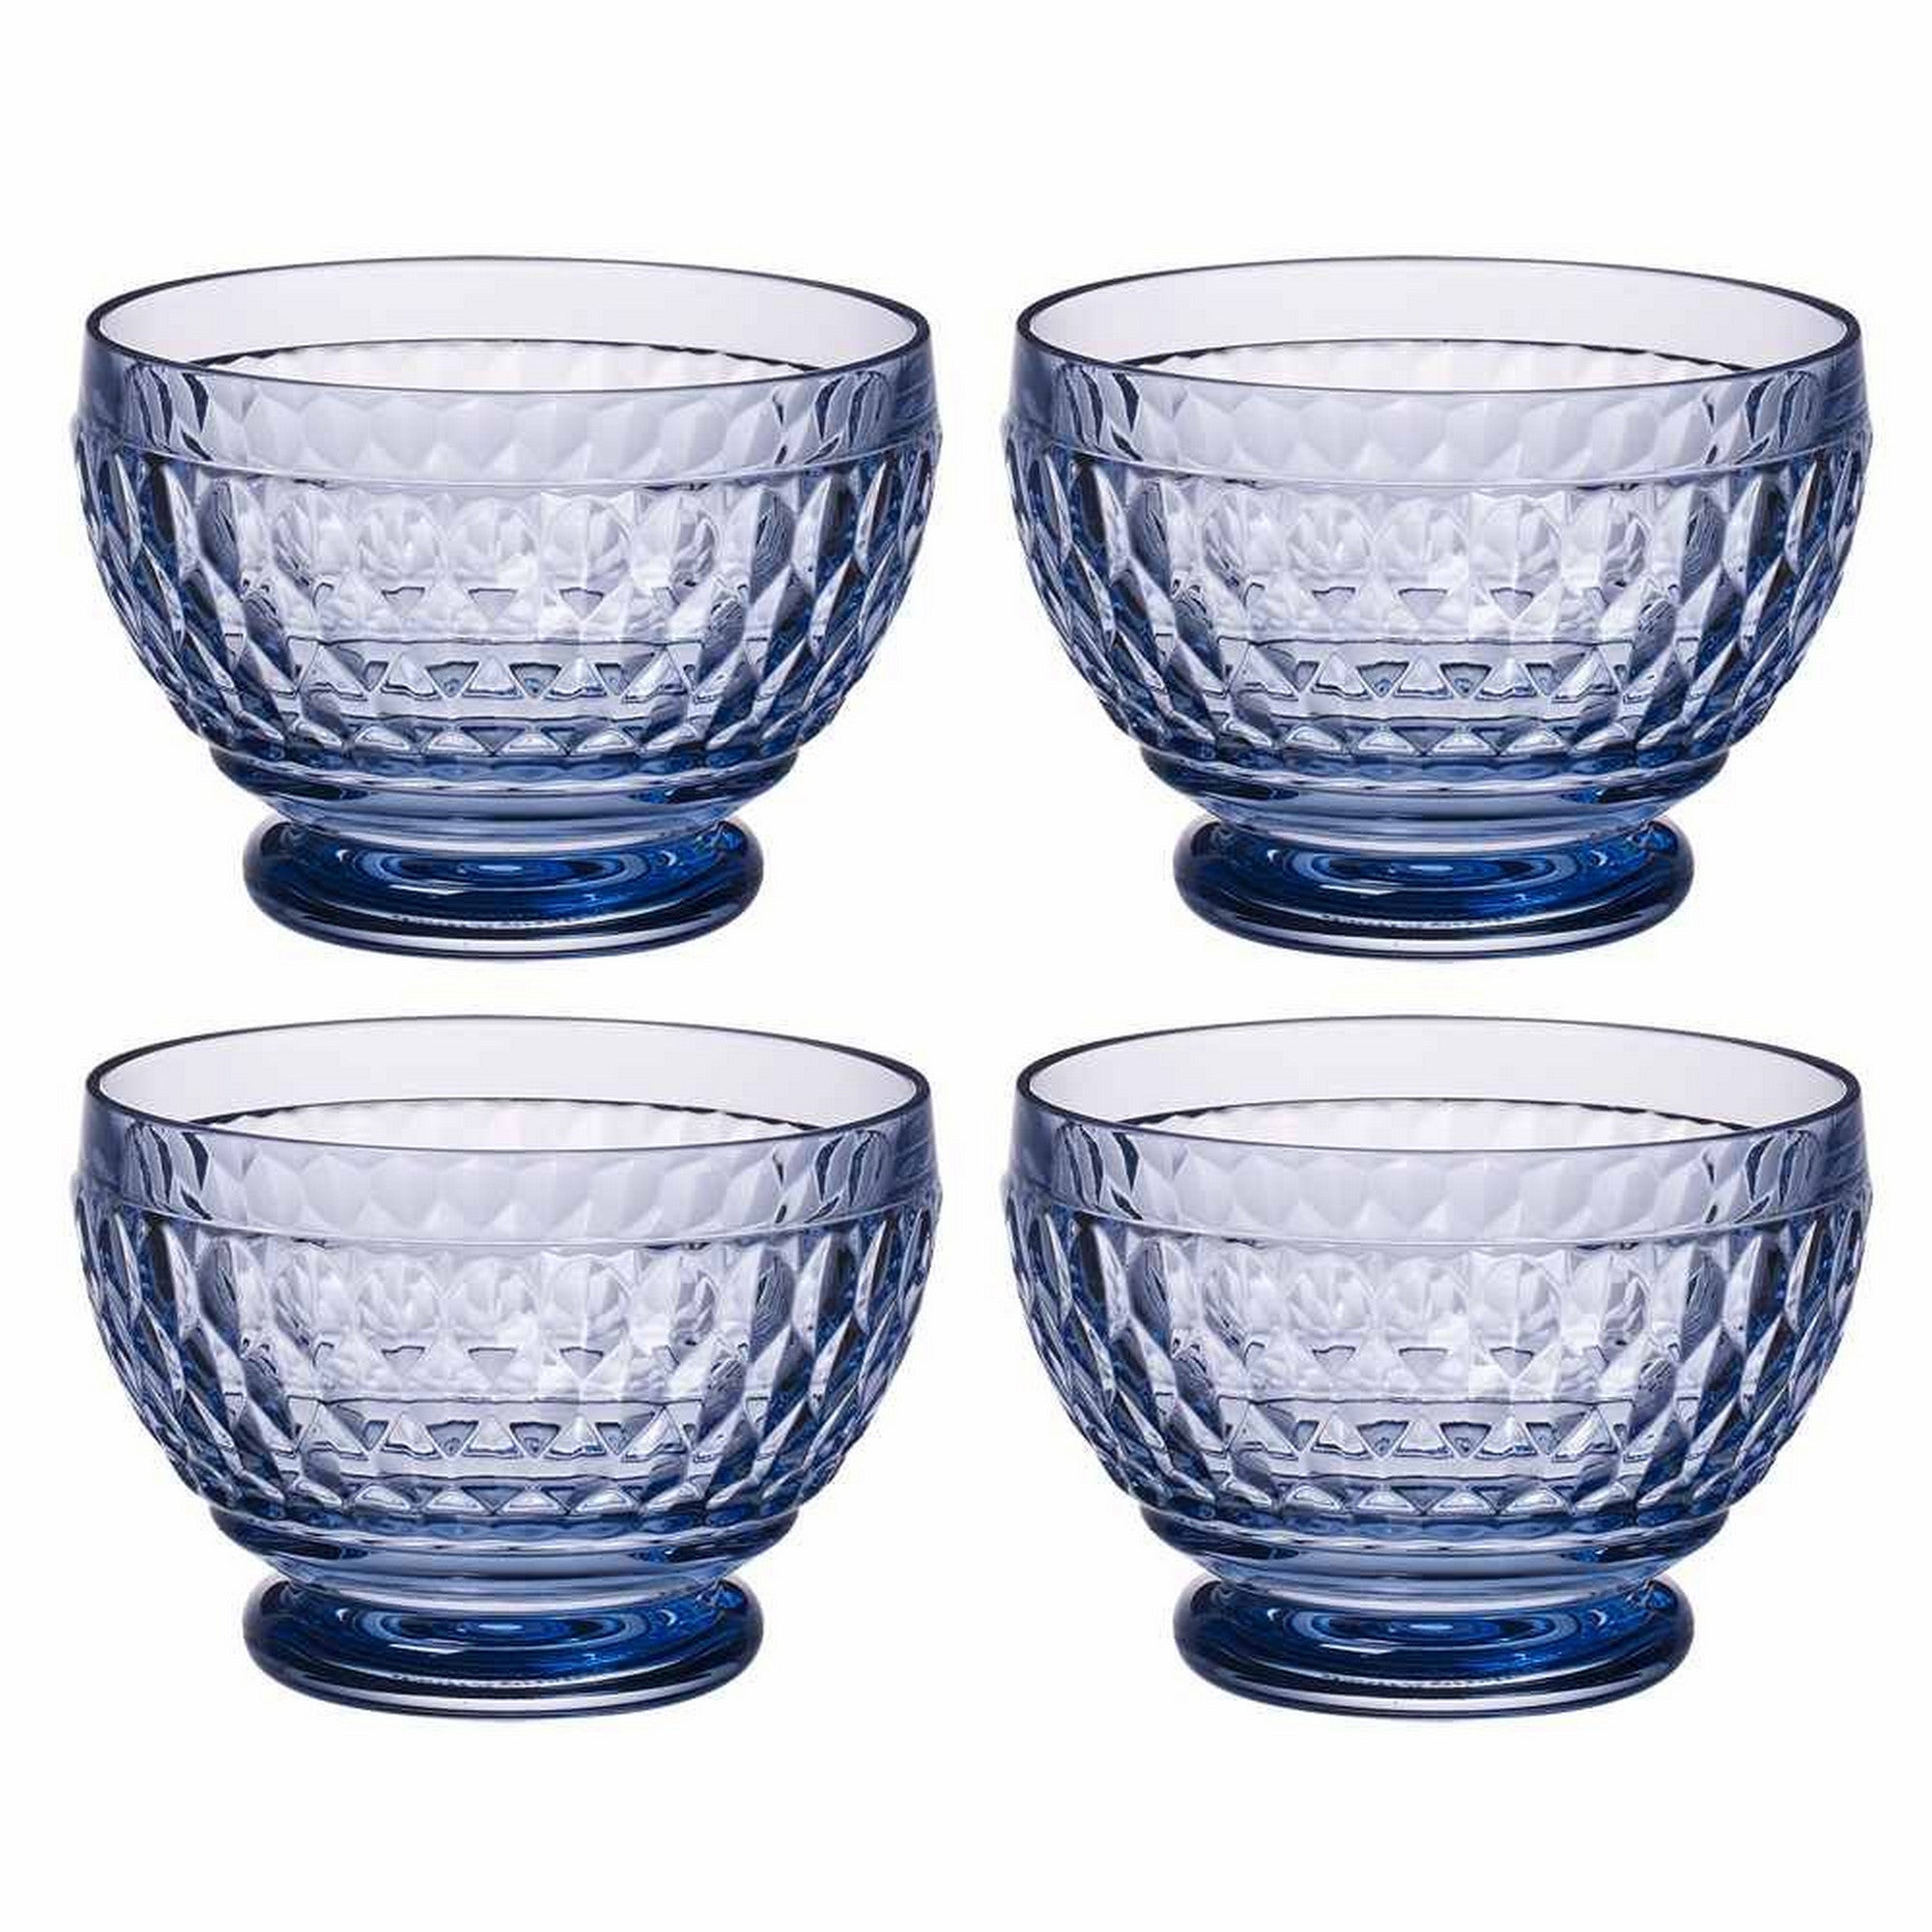 Villeroy & Boch Boston Colored Individual Bowls, Set of 4,  Blue,  14.5 oz